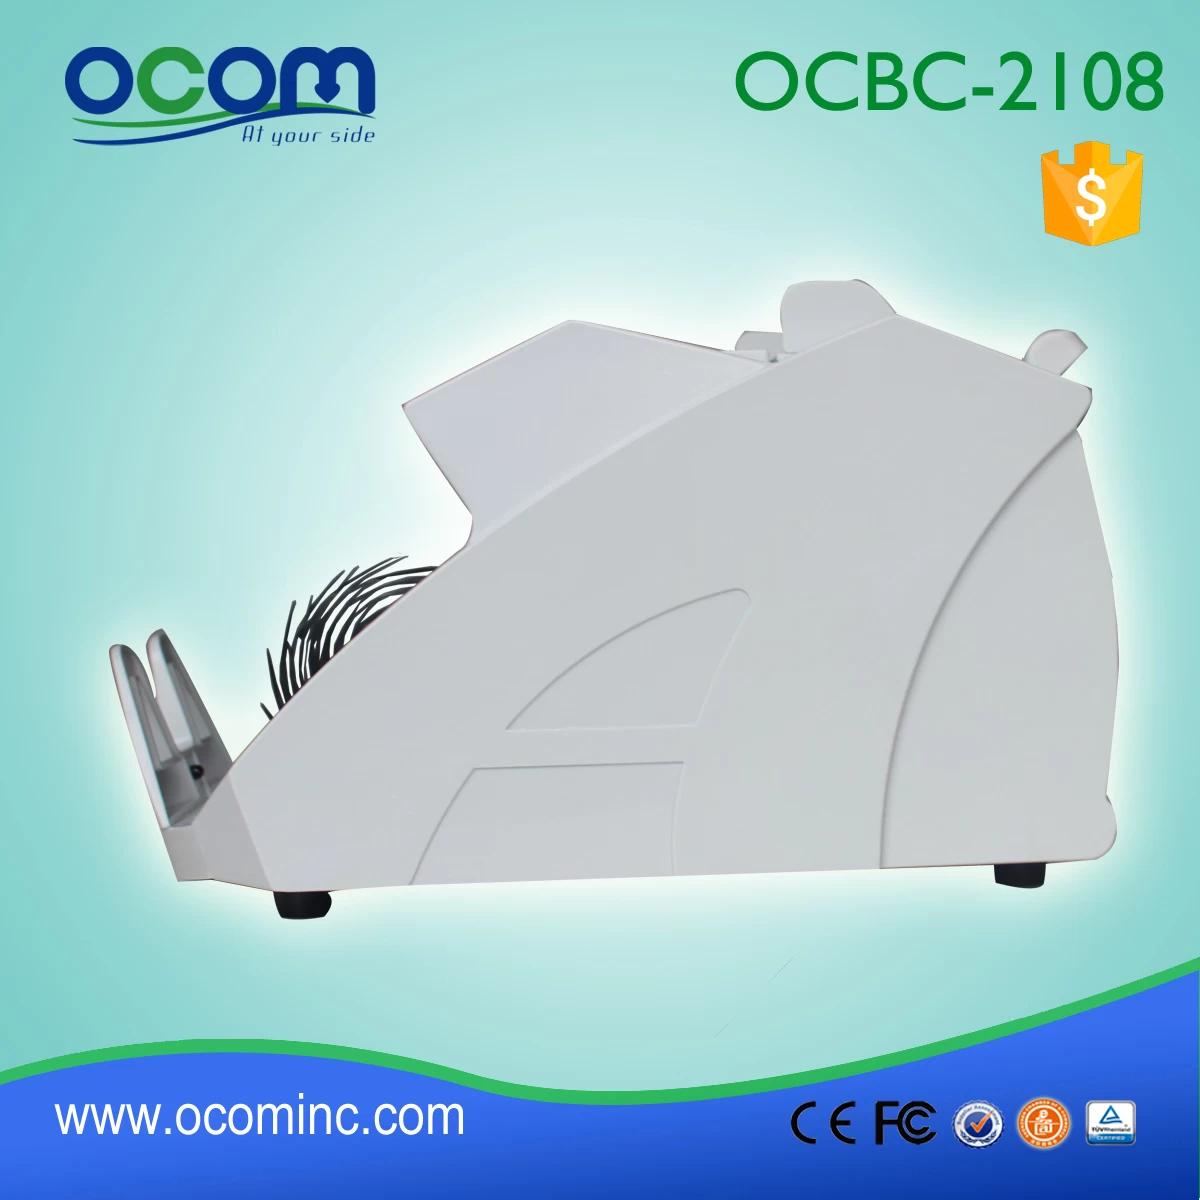 OCBC-2108 cheap money counter made in China